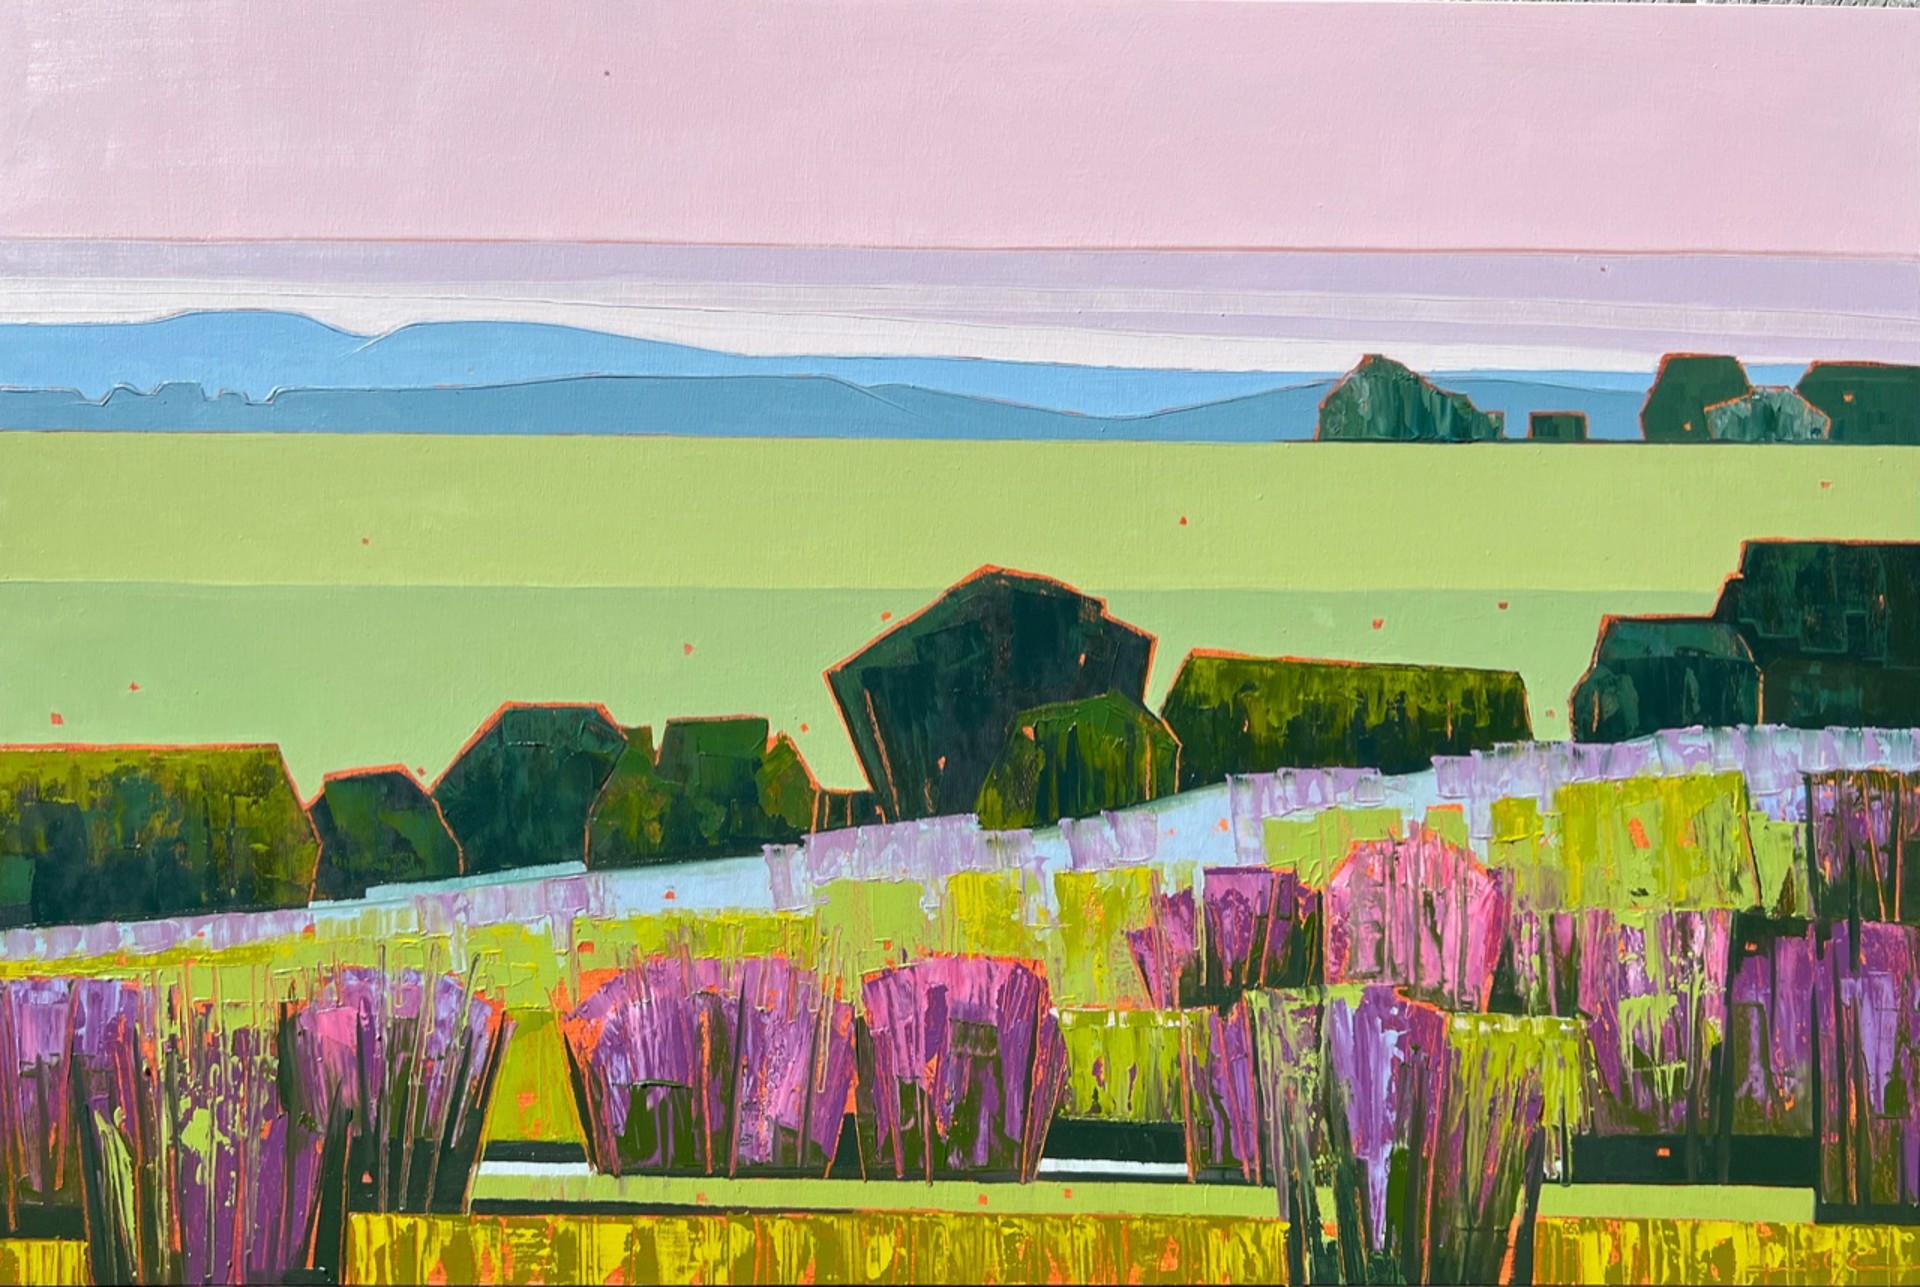 Lavender in June by Sarah Gayle Carter